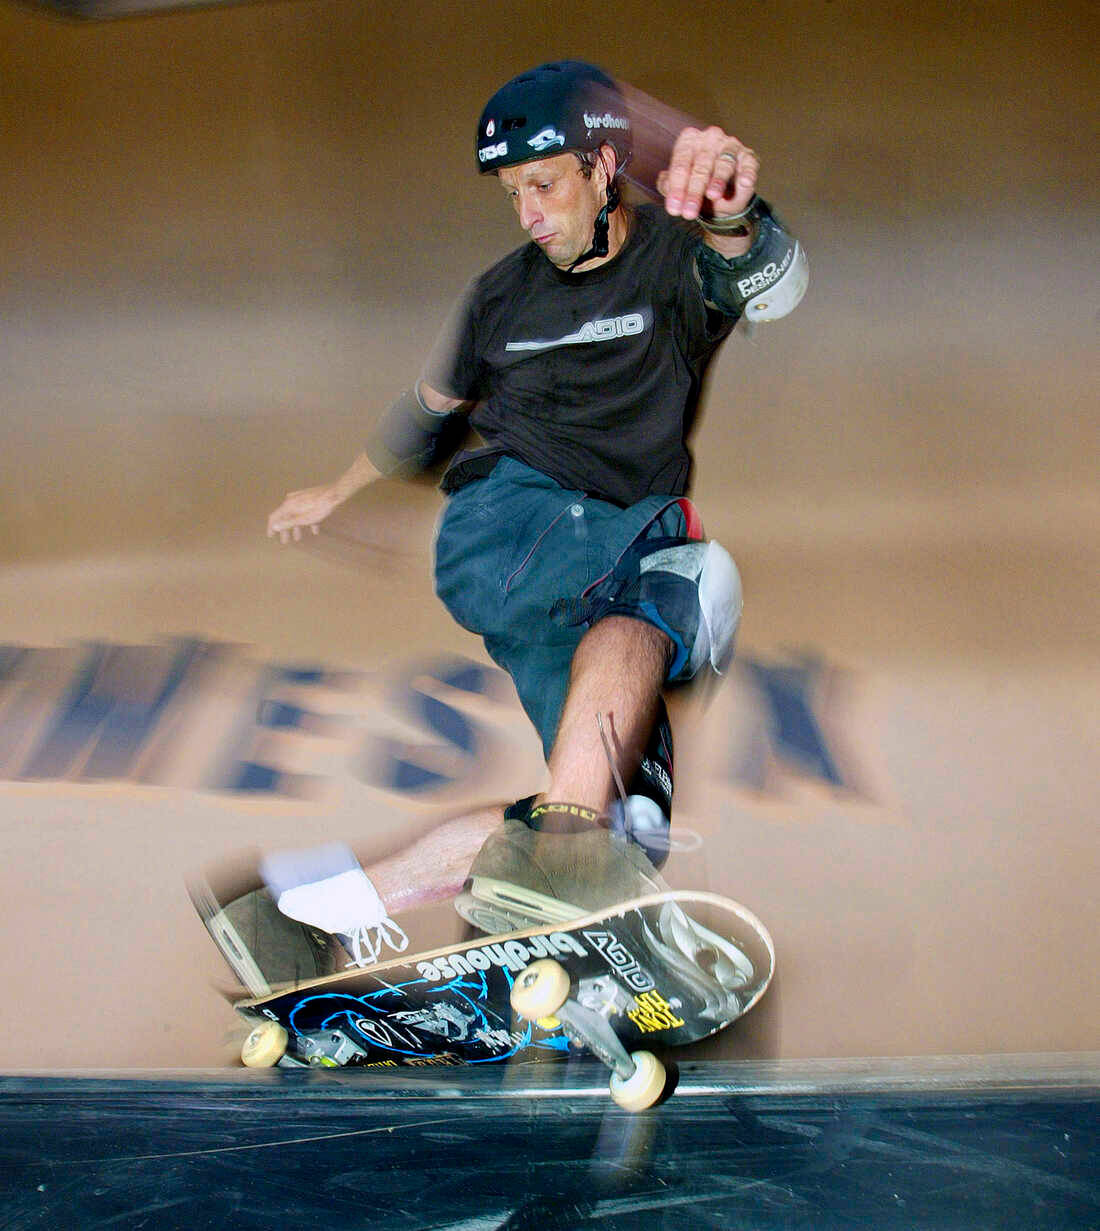 360 Spin Skateboarding Background